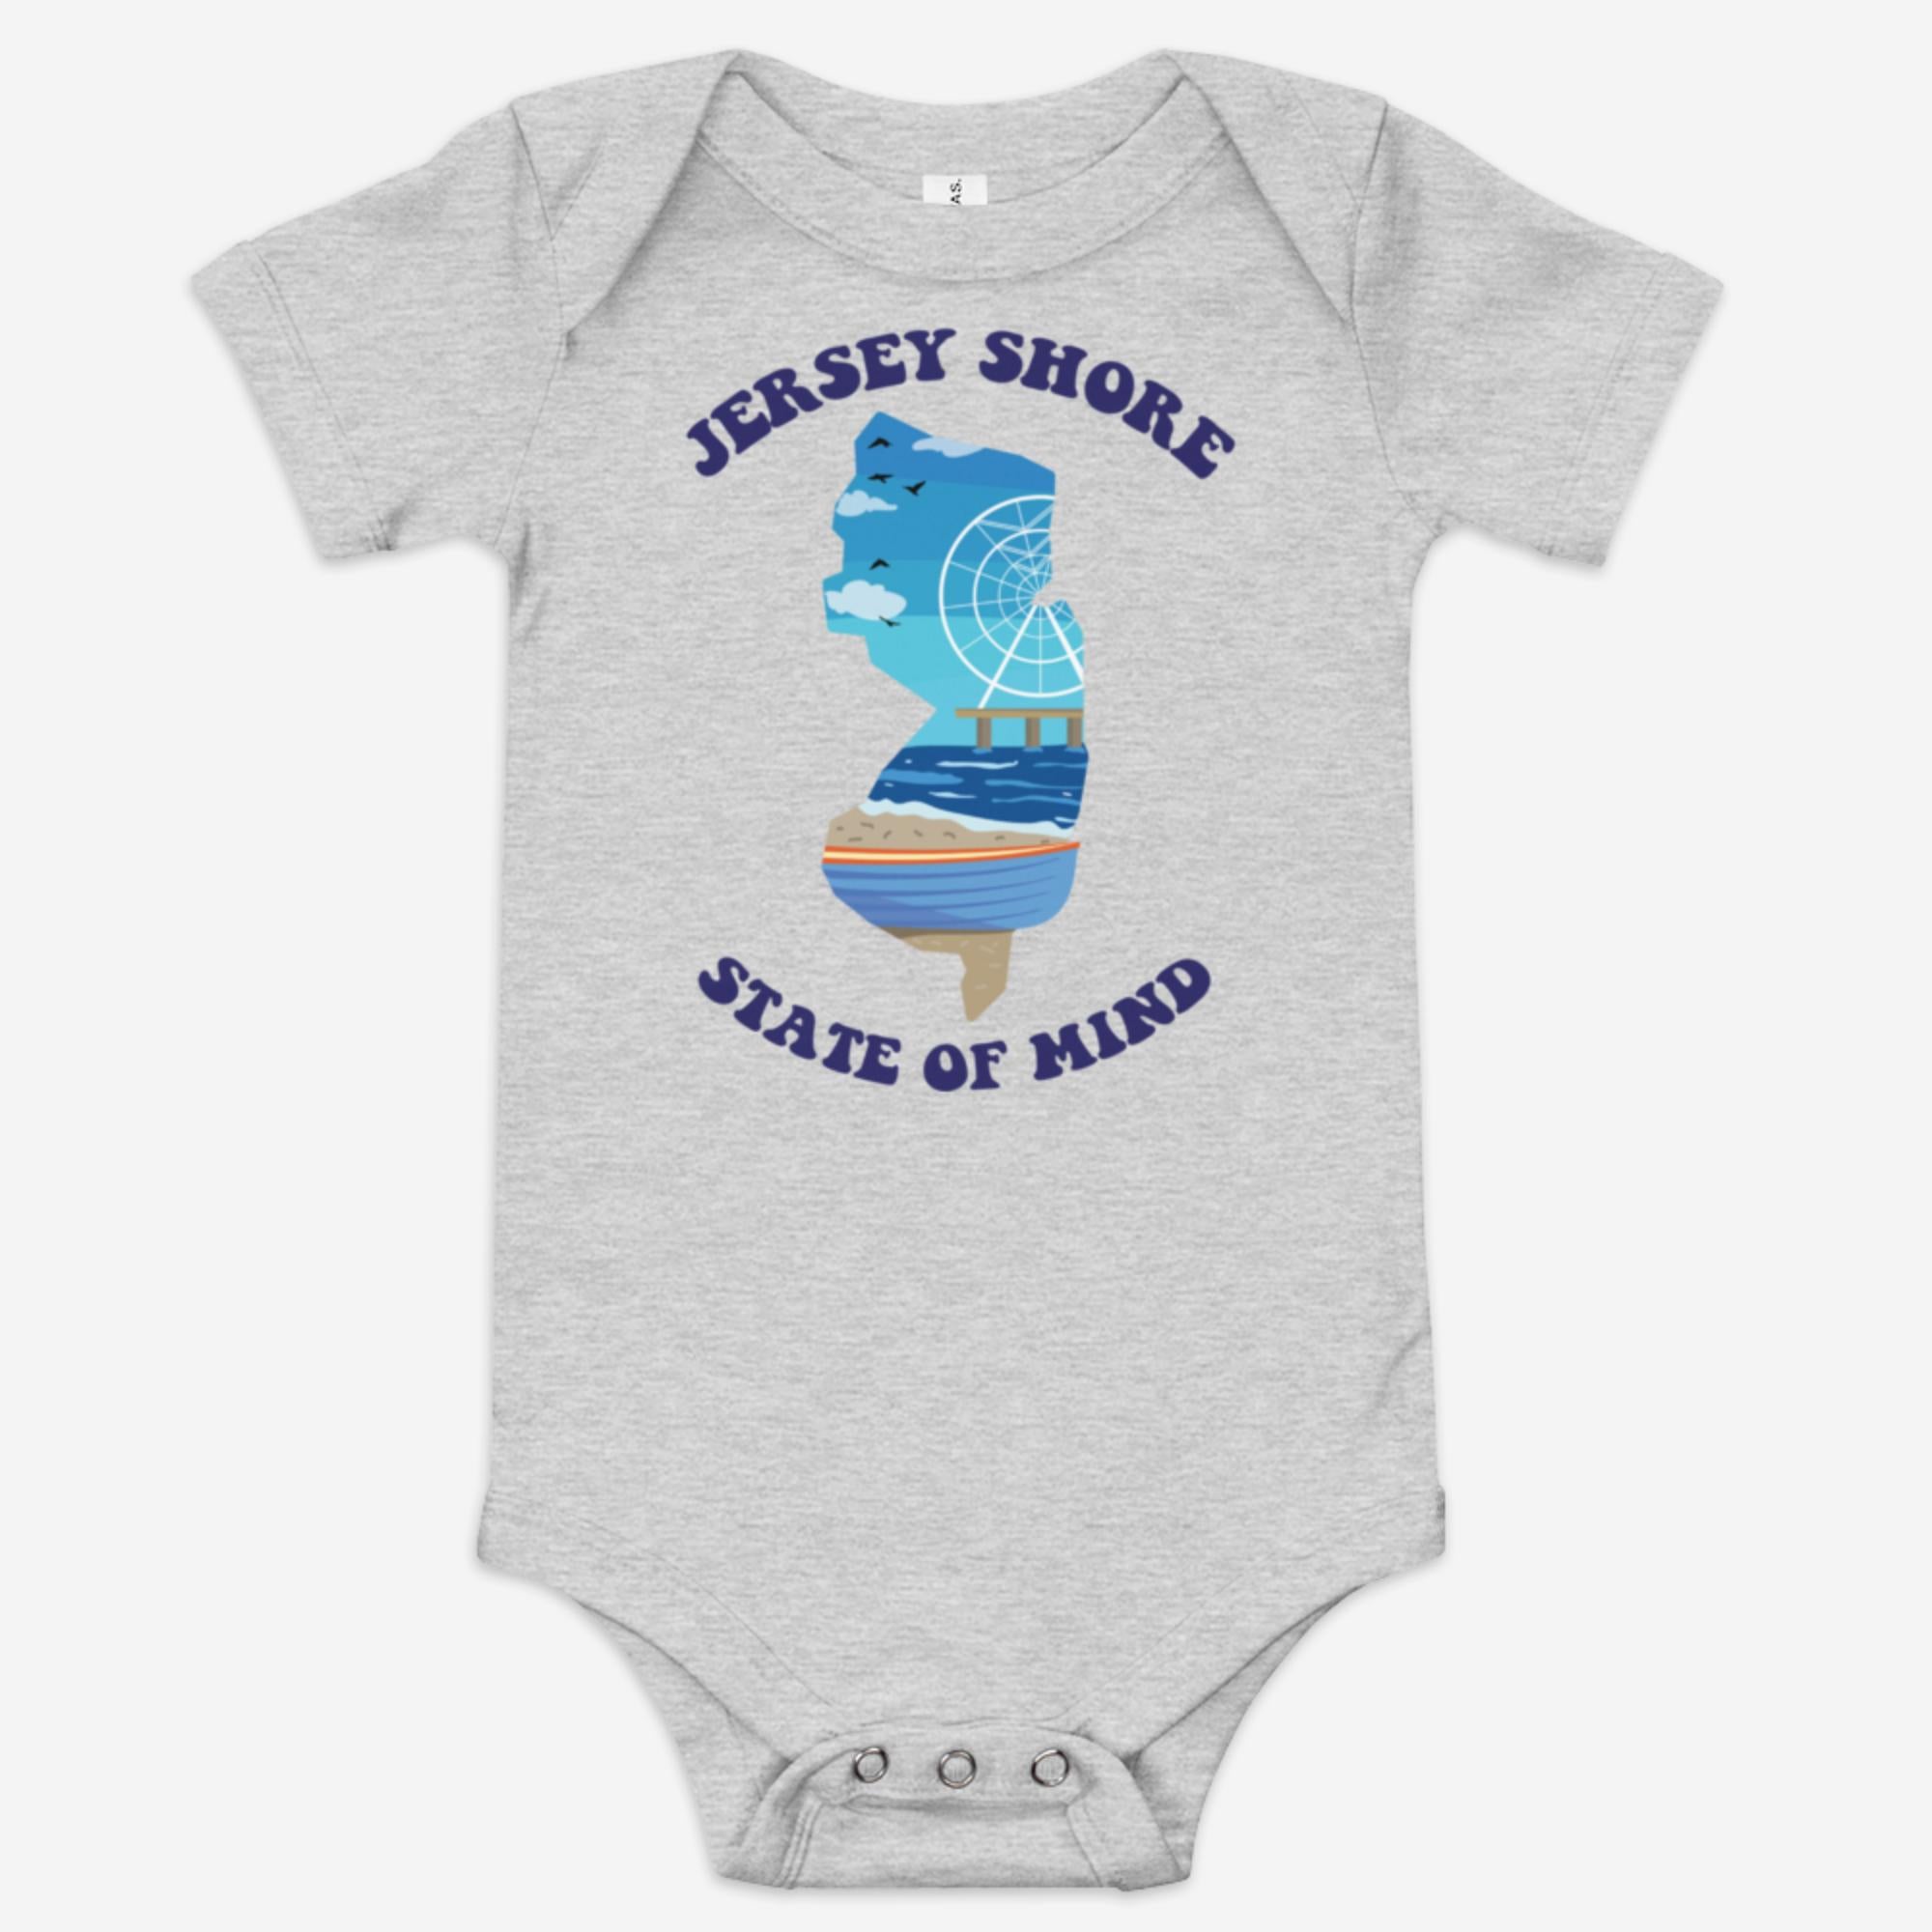 "Jersey Shore State of Mind" Baby Onesie